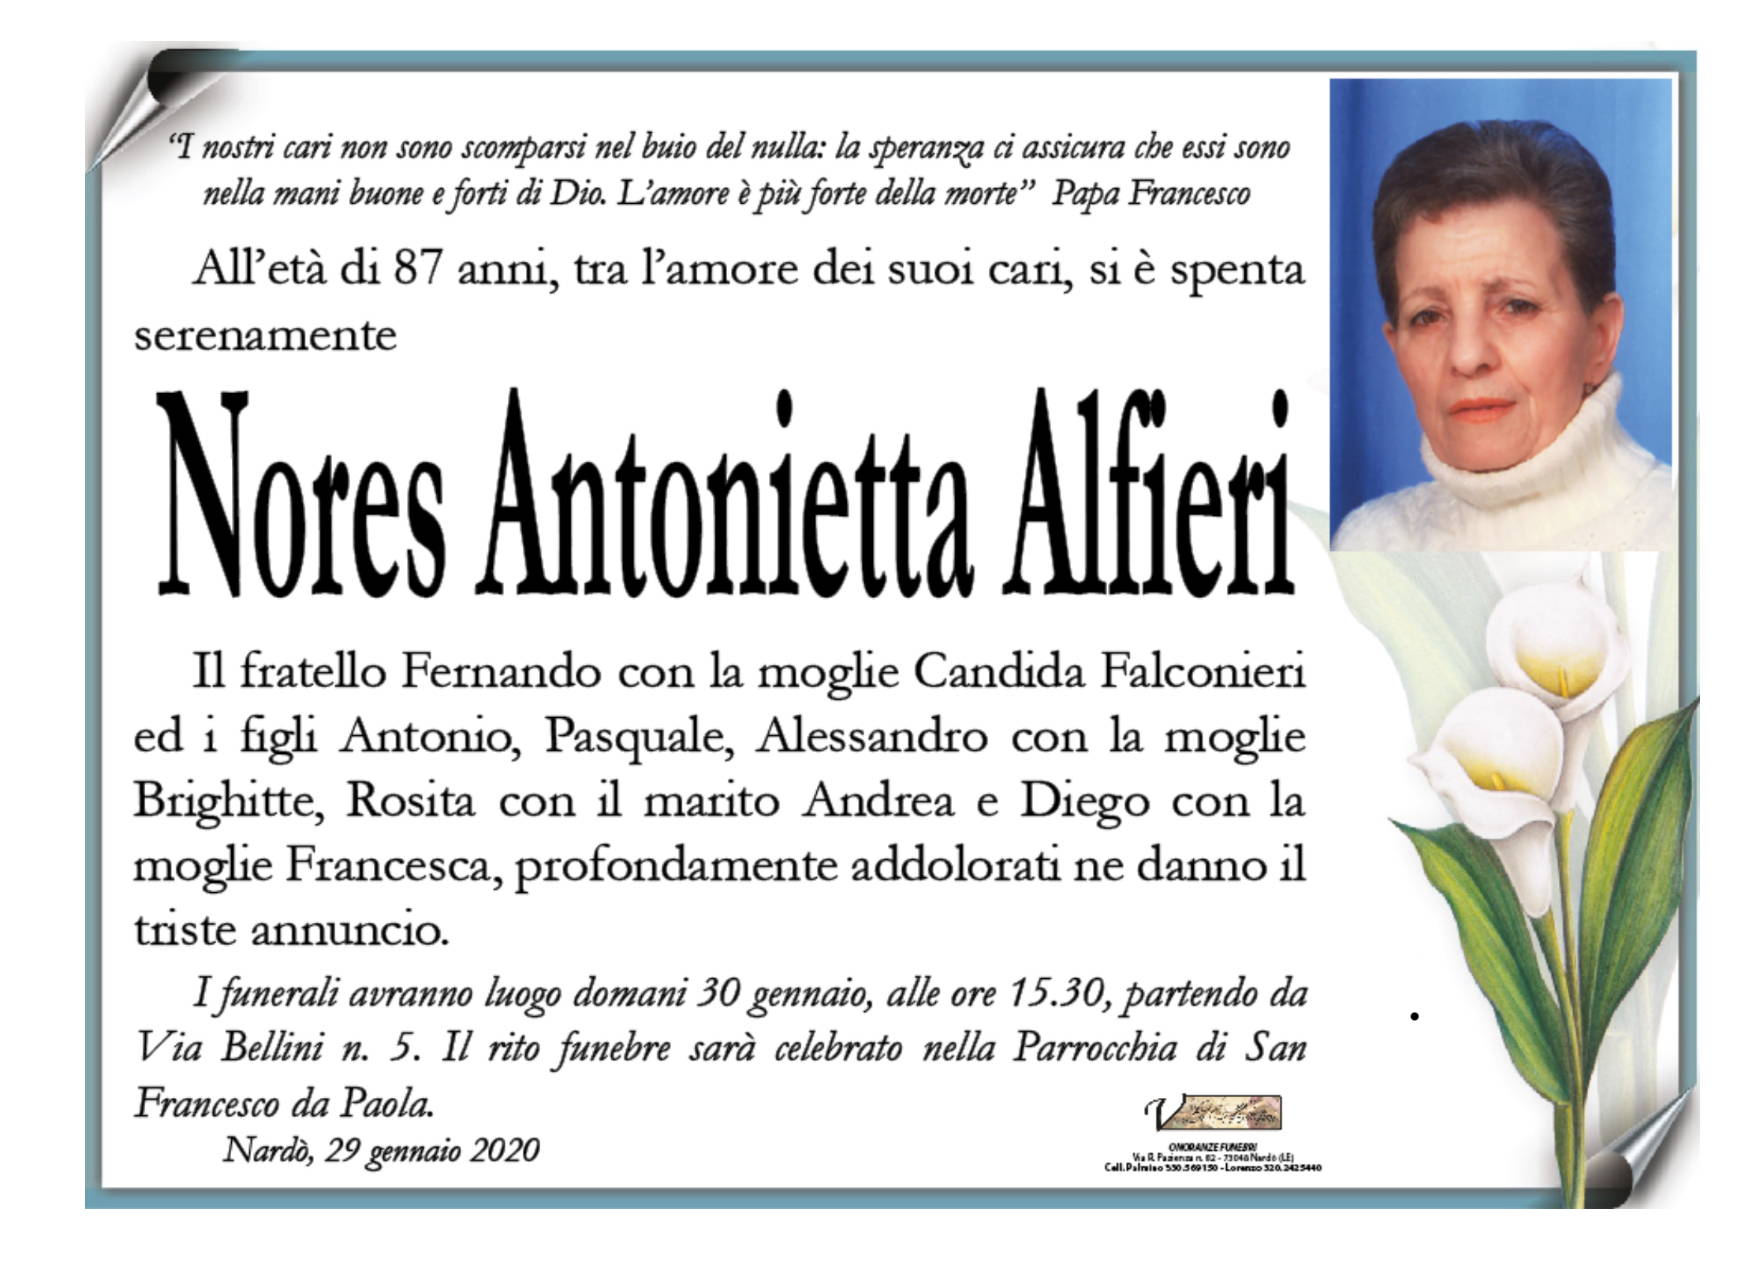 Nores Antonietta Alfieri